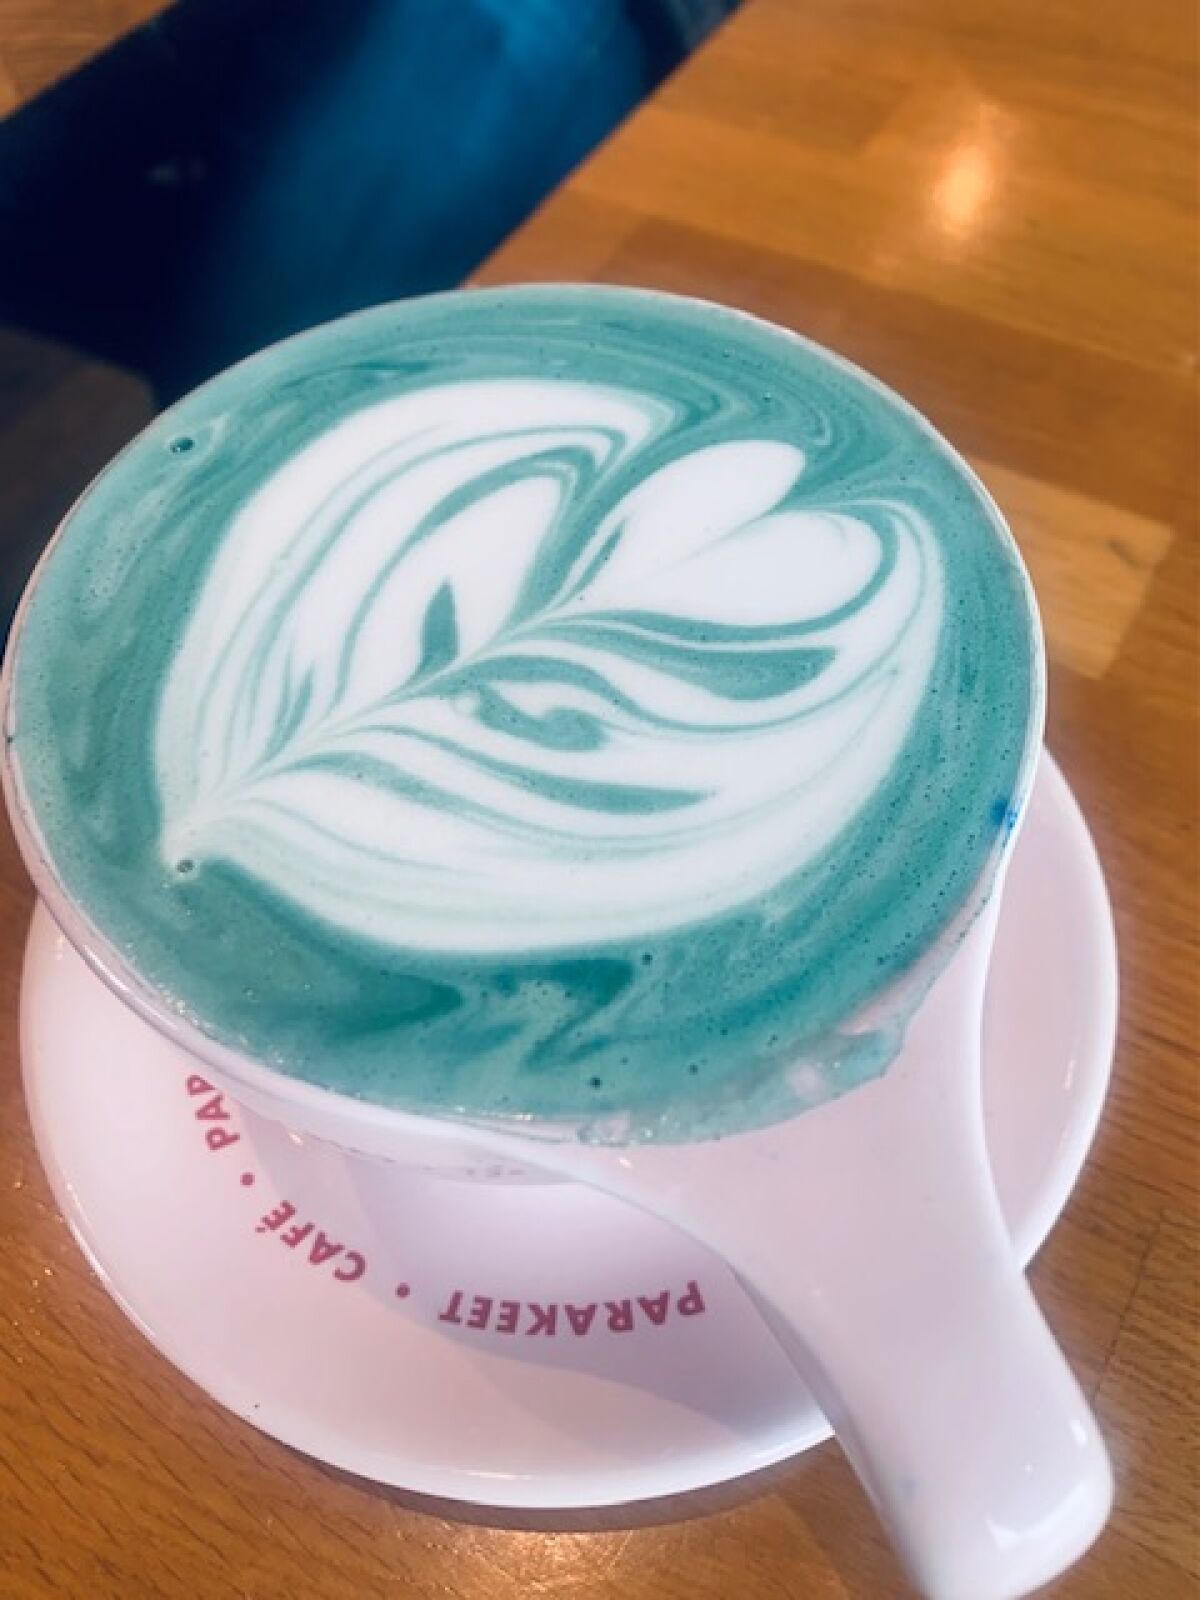 Spirulina matcha latte from Parakeet Cafe